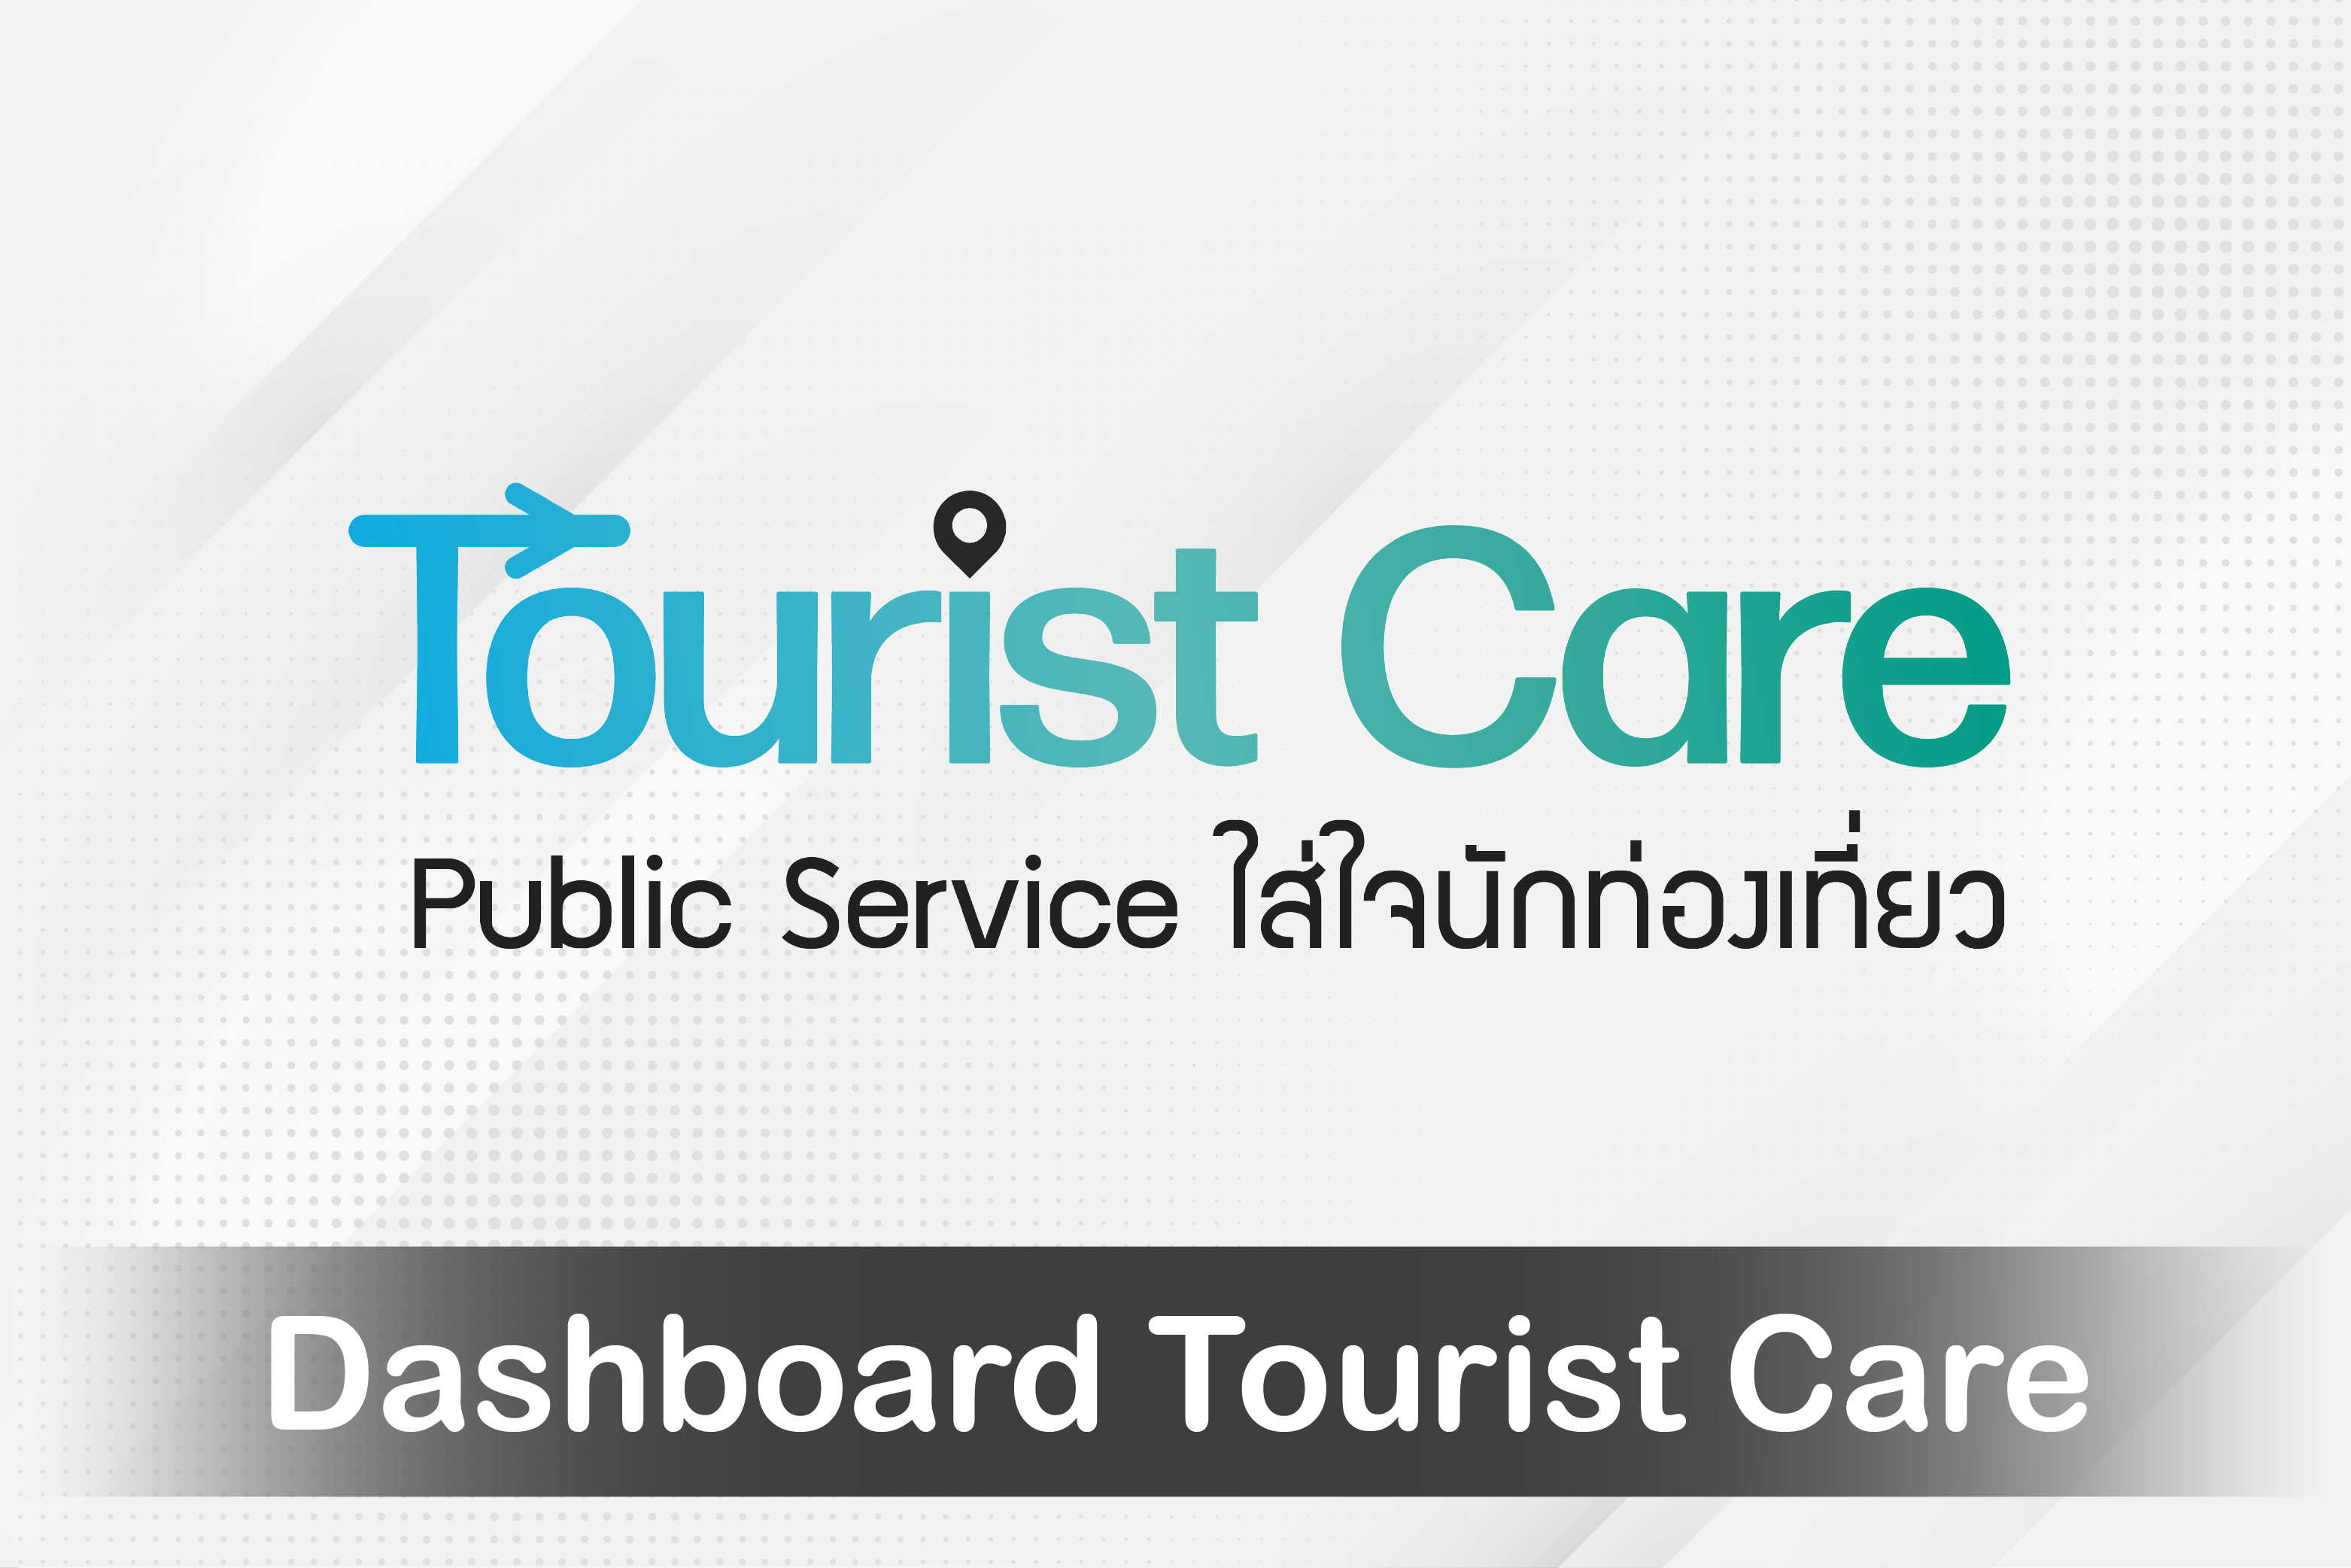 Tourist care Dashboard